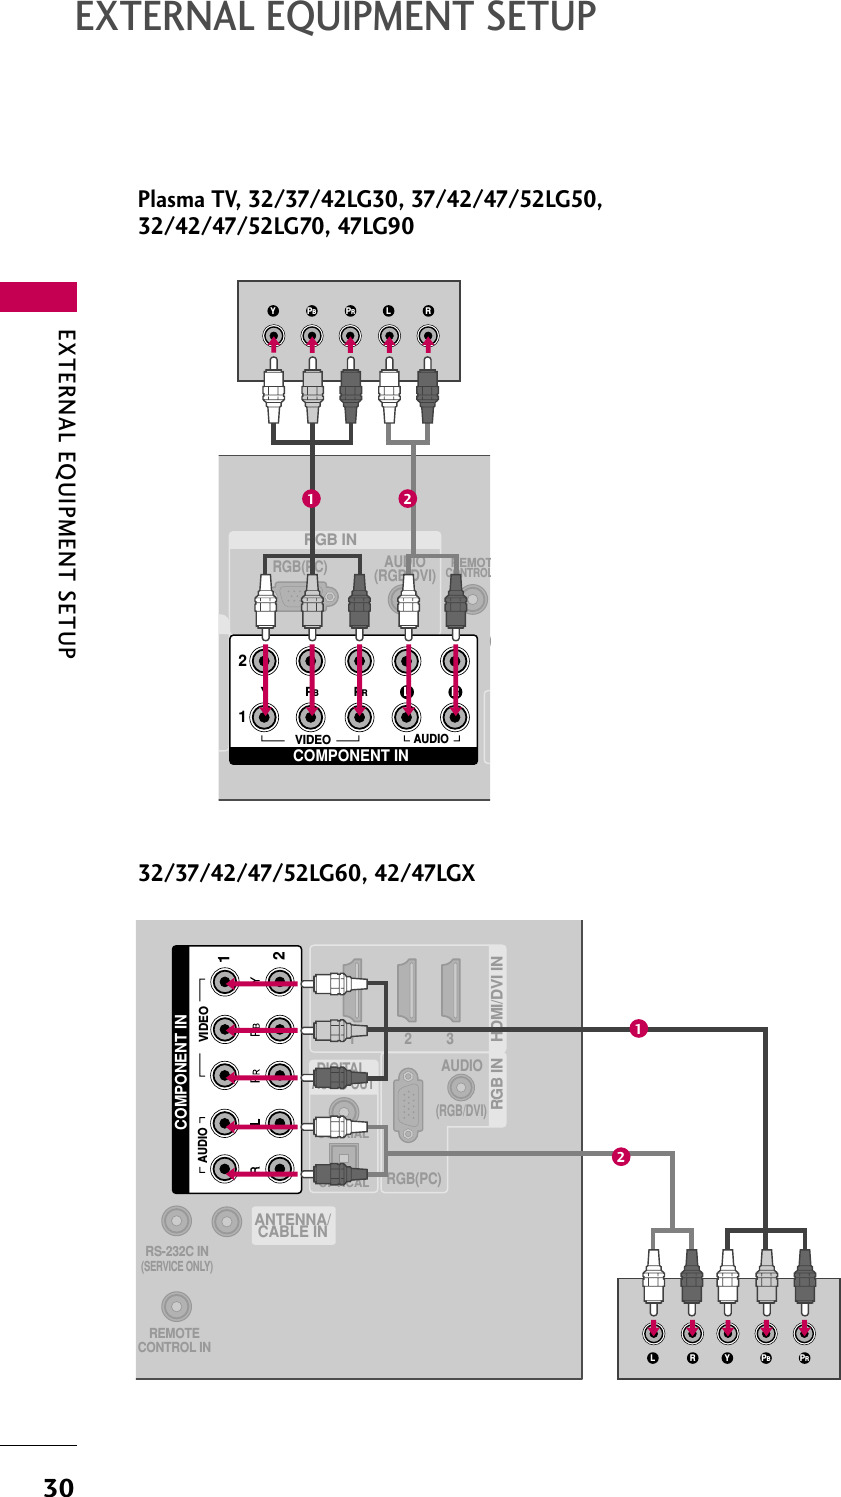 EXTERNAL EQUIPMENT SETUP30EXTERNAL EQUIPMENT SETUPRGB INAUDIO(RGB/DVI)RGB(PC)REMOTCONTROL(COMPONENT IN12VIDEOLYPBPRRAUDIOY L RPBPR1 2(RGB/DVI)AUDIORGB(PC)REMOTECONTROL INRS-232C IN(SERVICE ONLY)OPTICALCOAXIALDIGITAL AUDIO OUT1 2 3HDMI/DVI IN RGB IN ANTENNA/CABLE INCOMPONENT IN21VIDEOAUDIOYL R PBPR1232/37/42/47/52LG60, 42/47LGXPlasma TV, 32/37/42LG30, 37/42/47/52LG50,32/42/47/52LG70, 47LG90